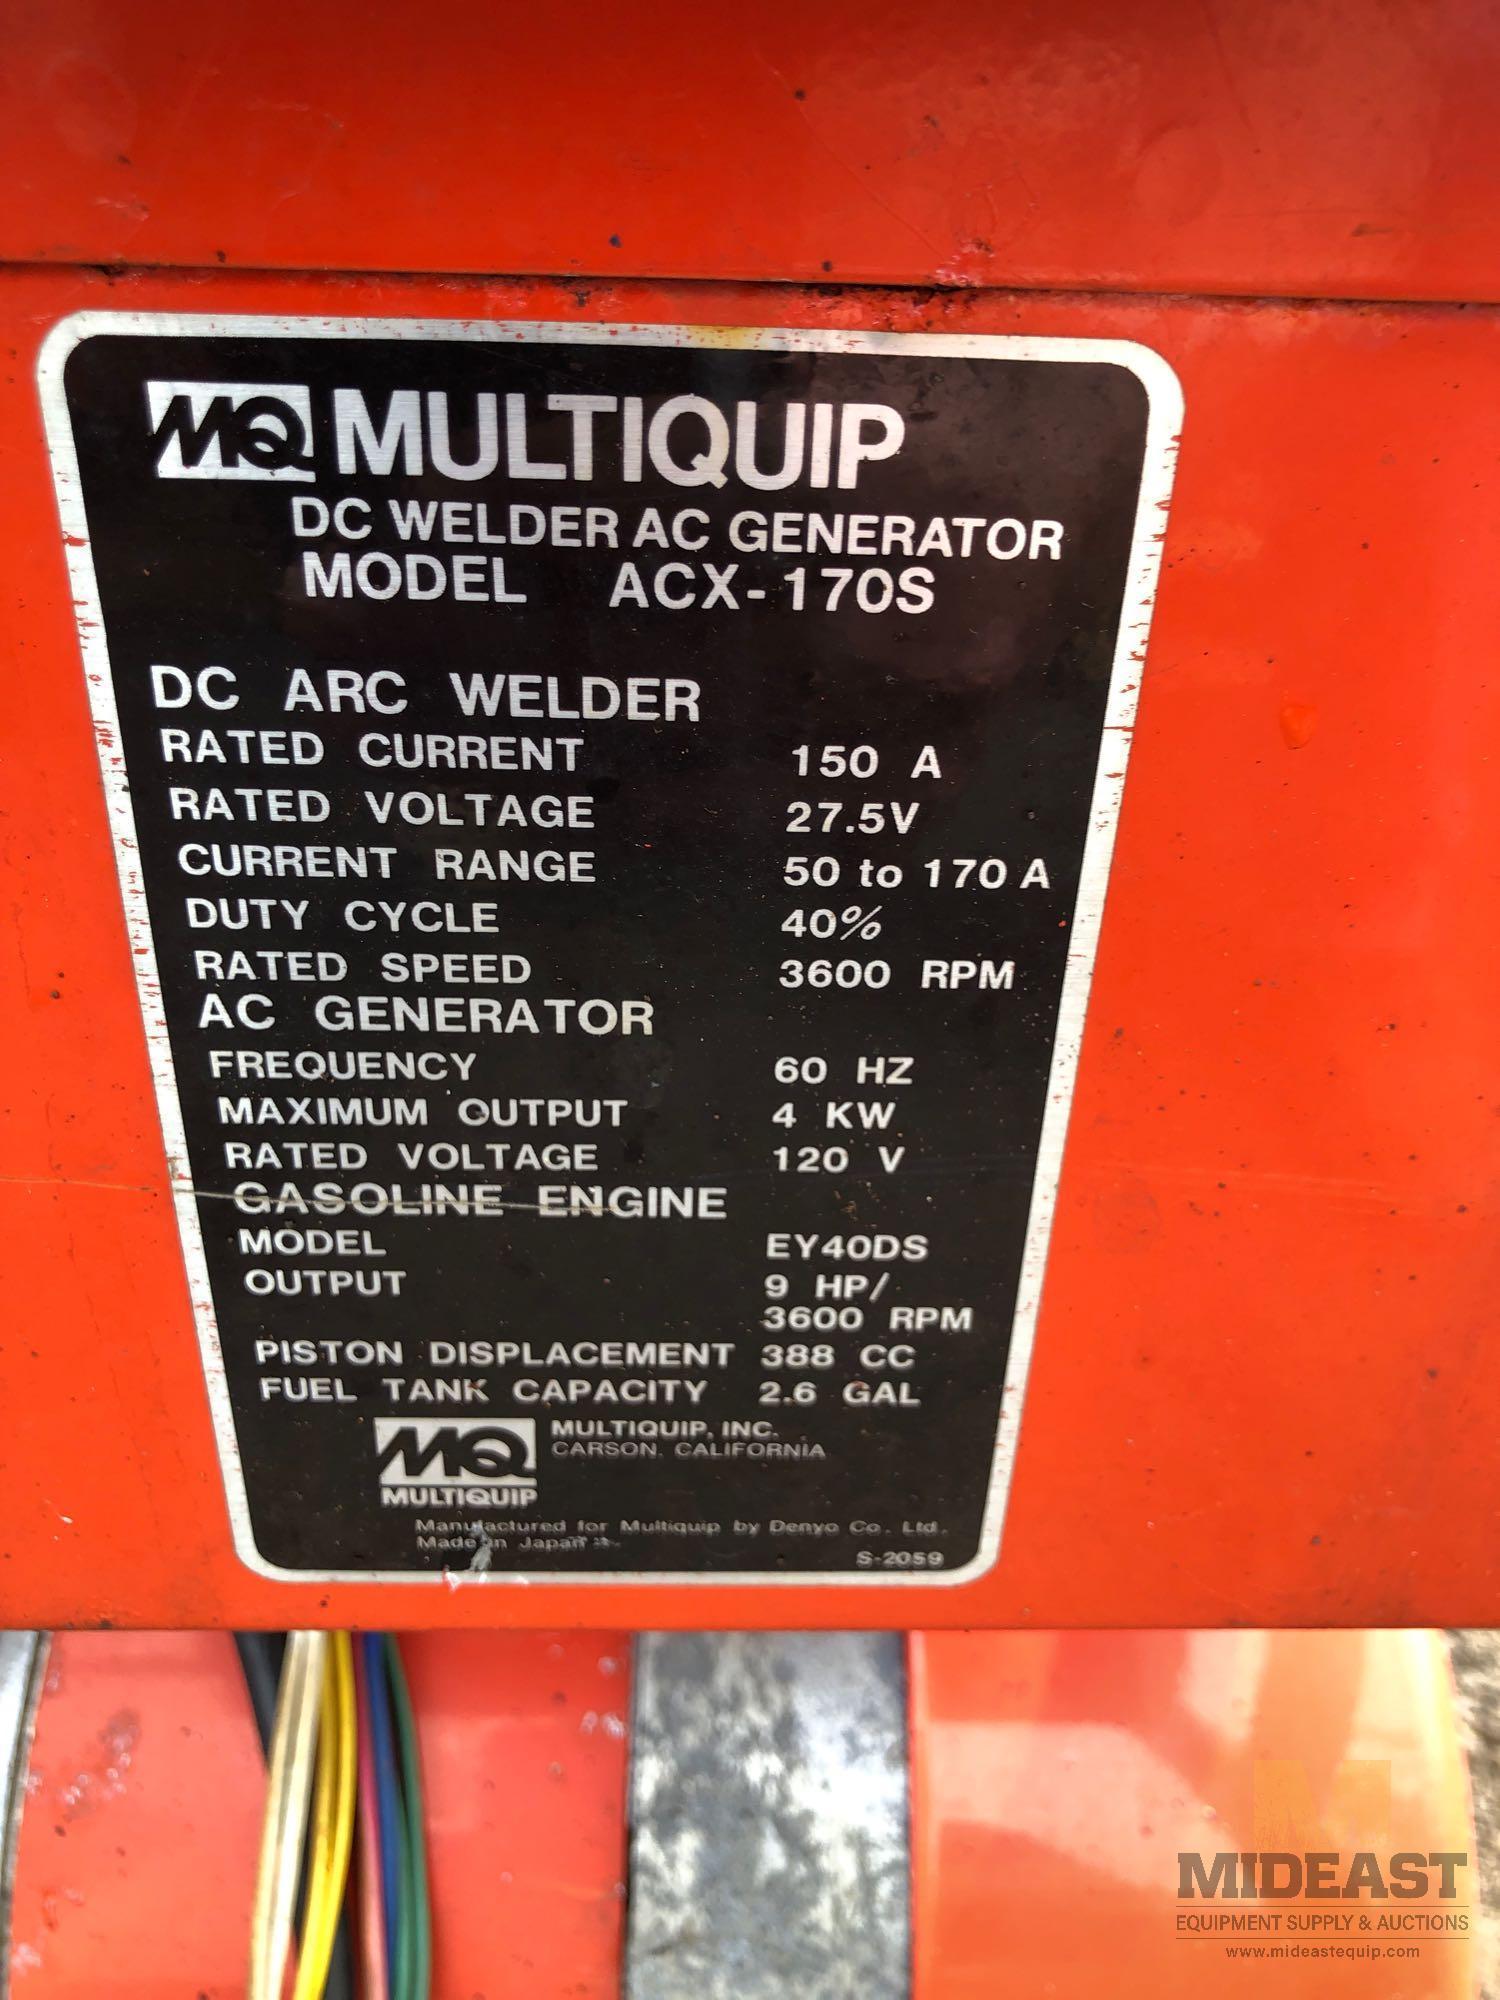 DC Welder AC Generator, Model ACX-170S